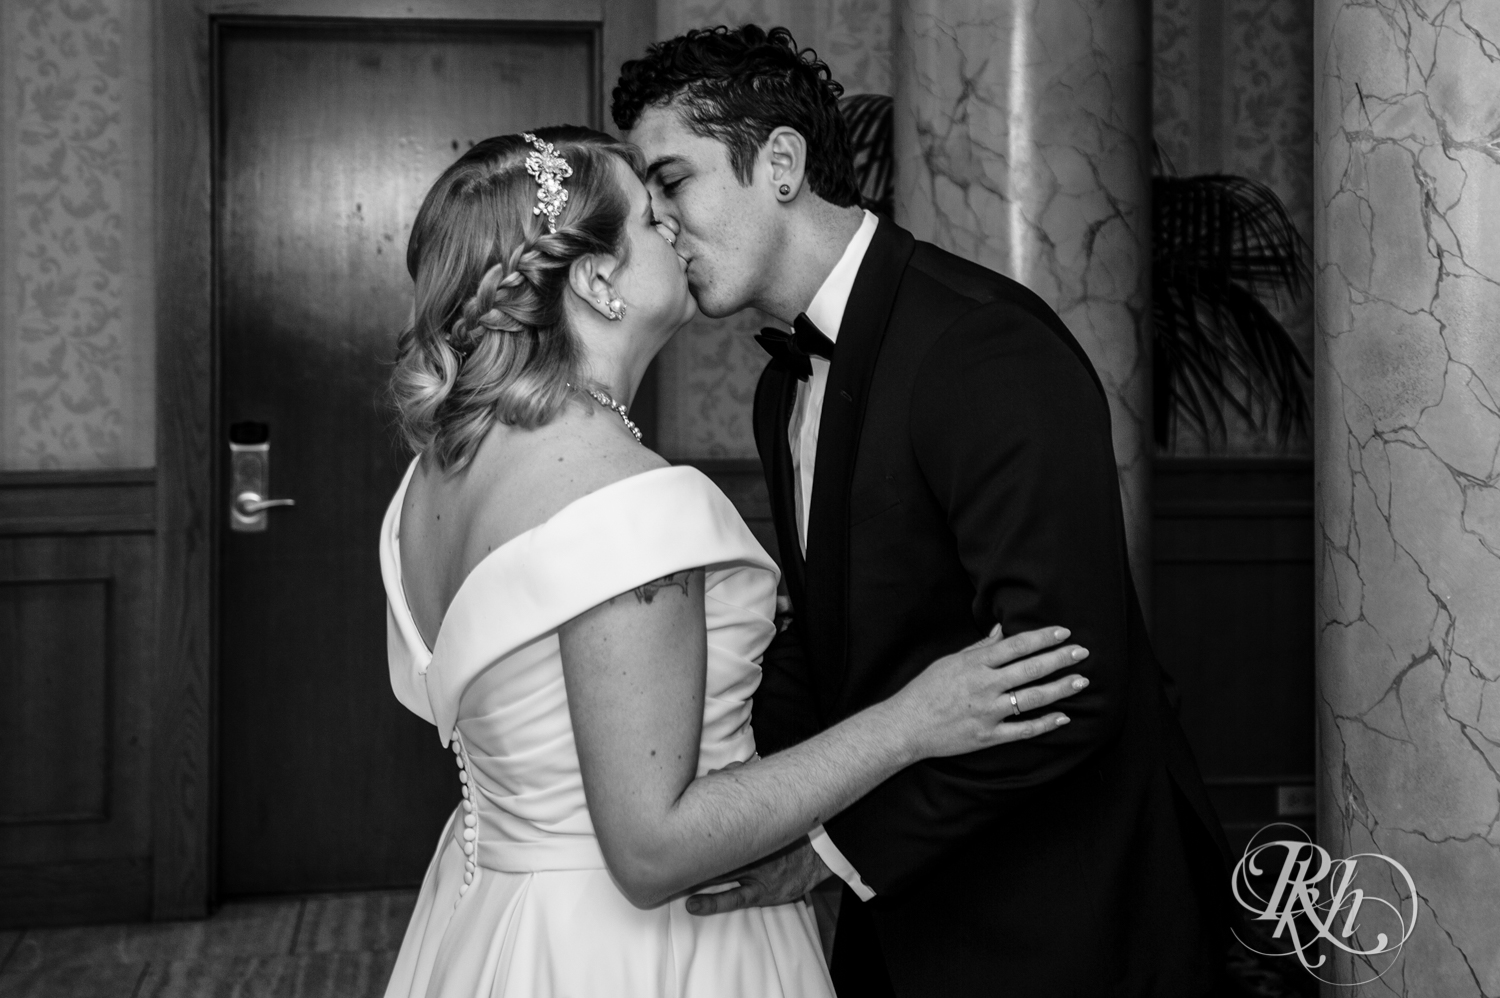 Bride with rainbow hair and groom in maroon suit kiss at the Saint Paul Hotel in Saint Paul, Minnesota.